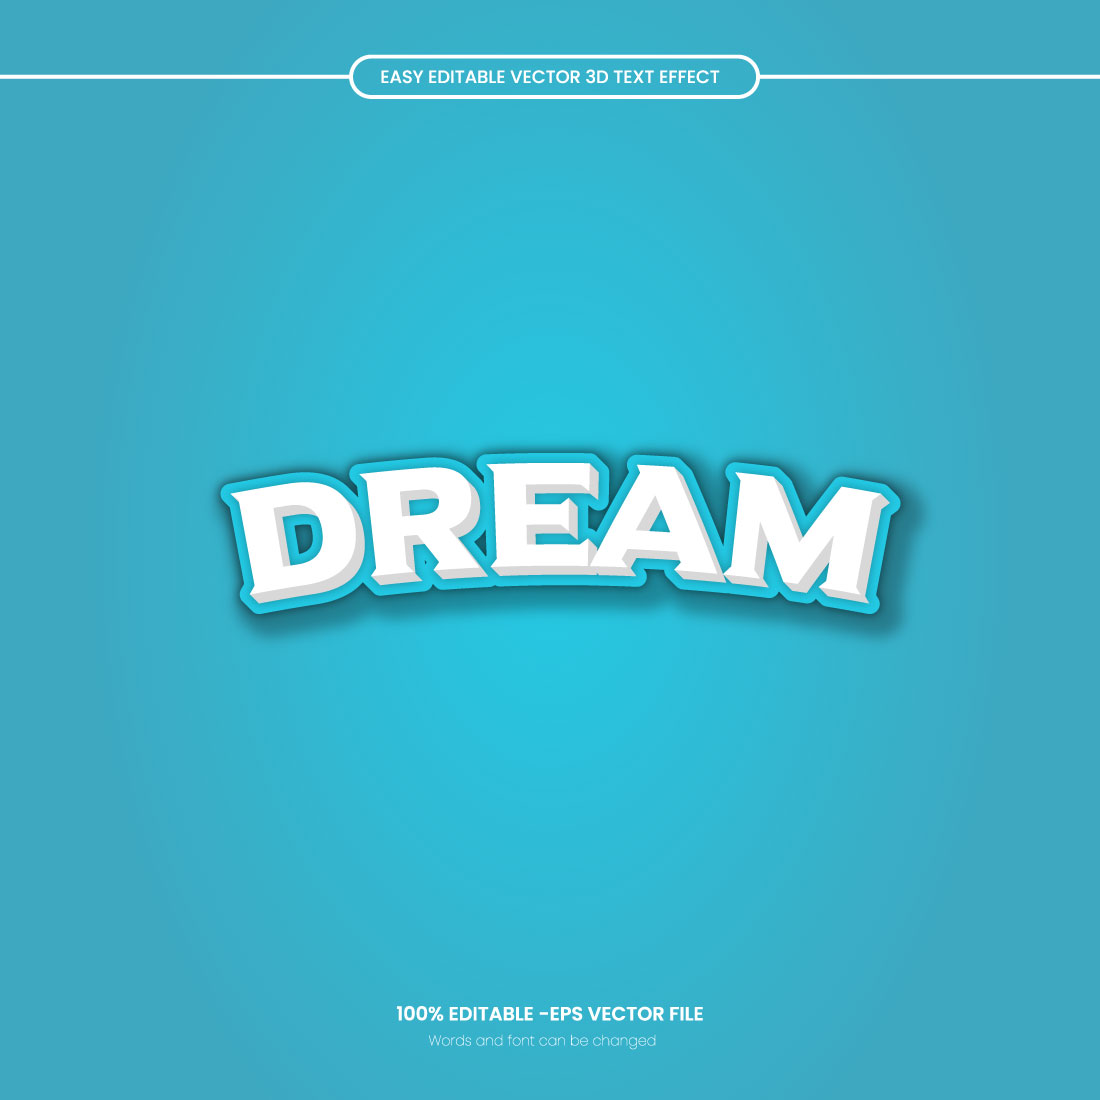 Dream 3d editable text effect design preview image.